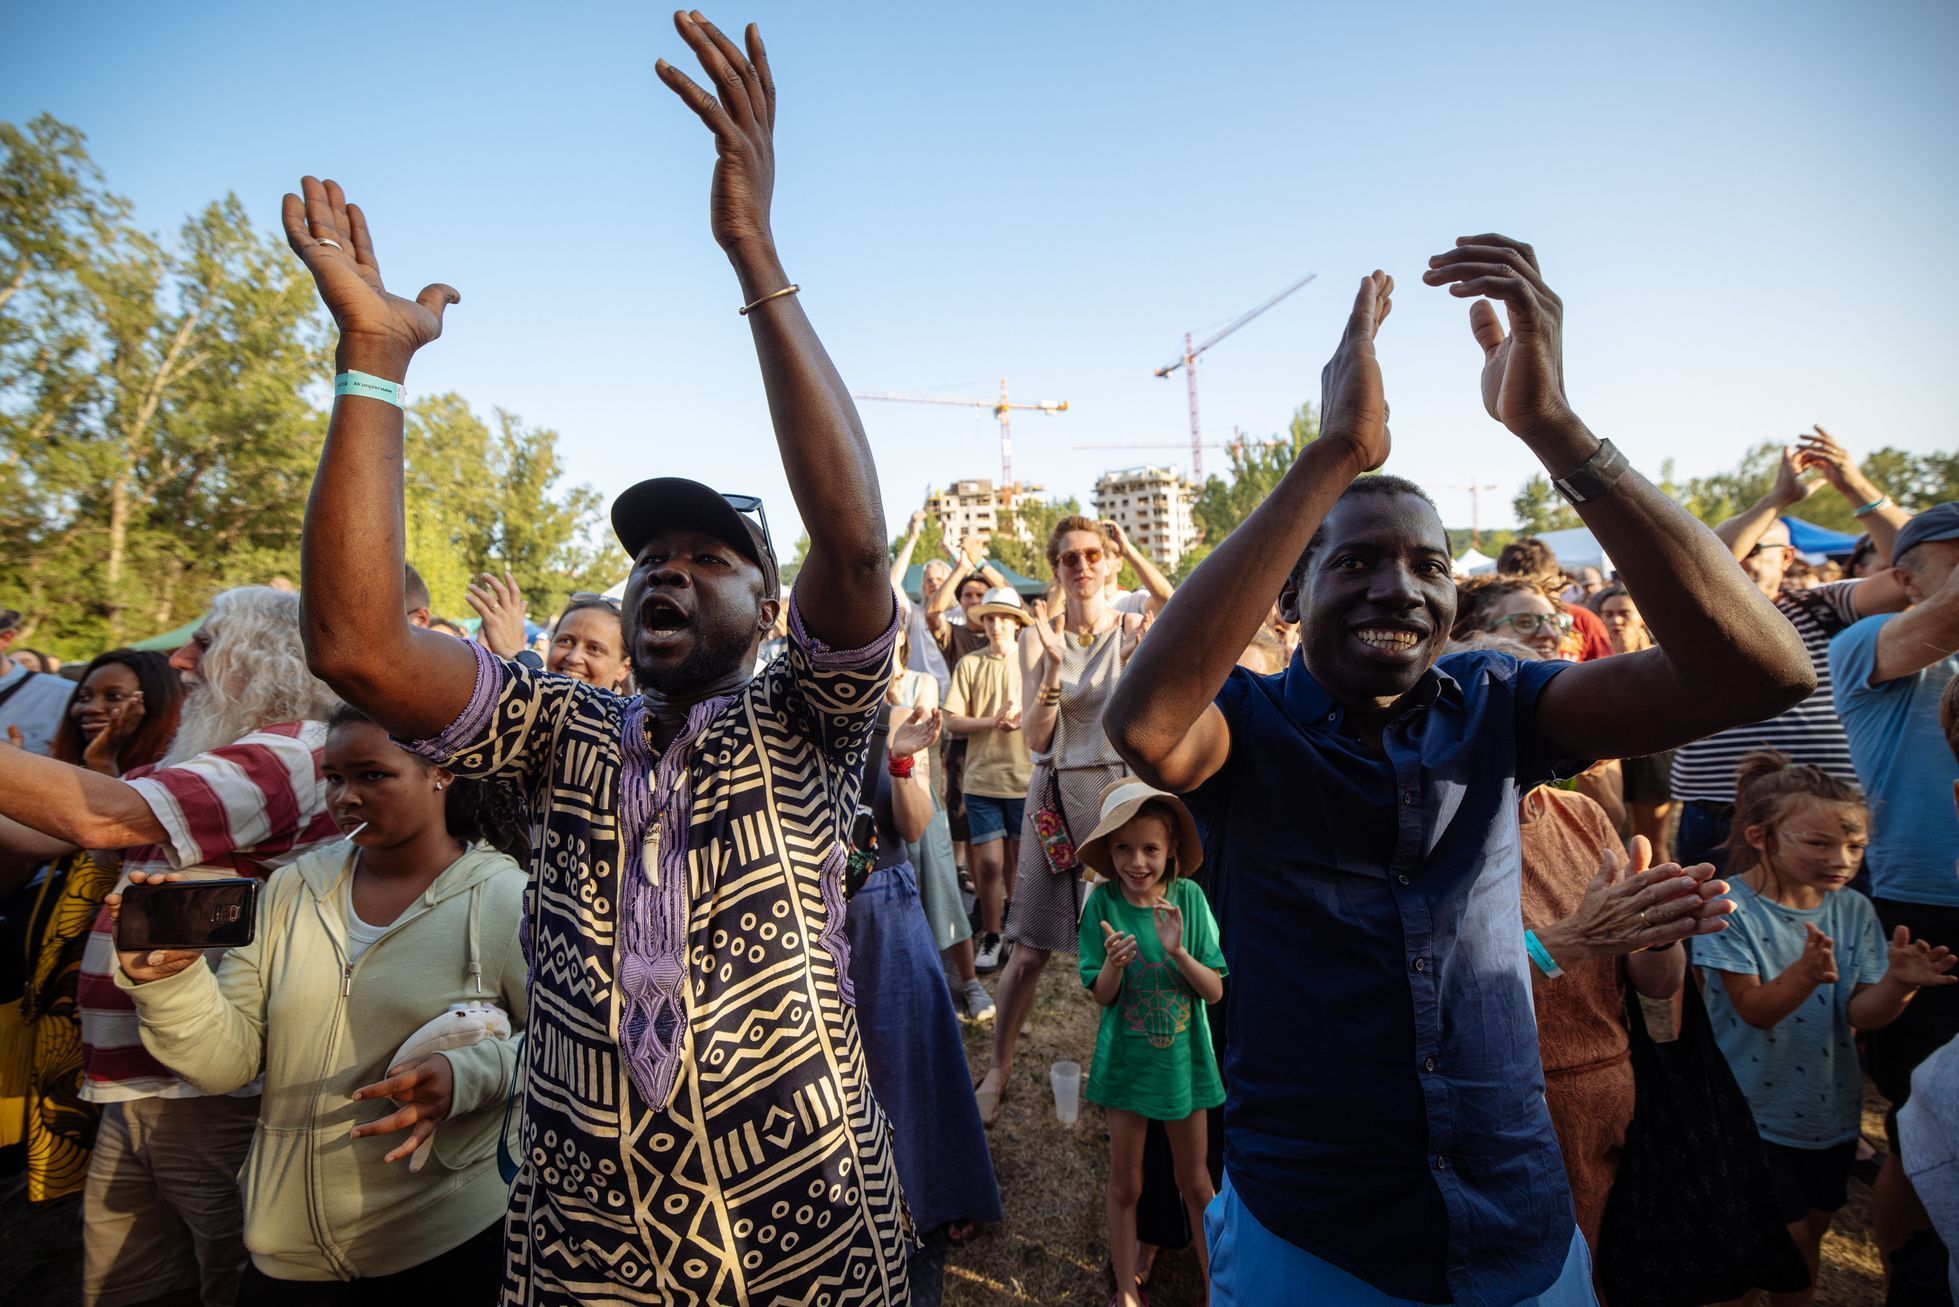 Oumou Sangaré, Respect Festival, 2022